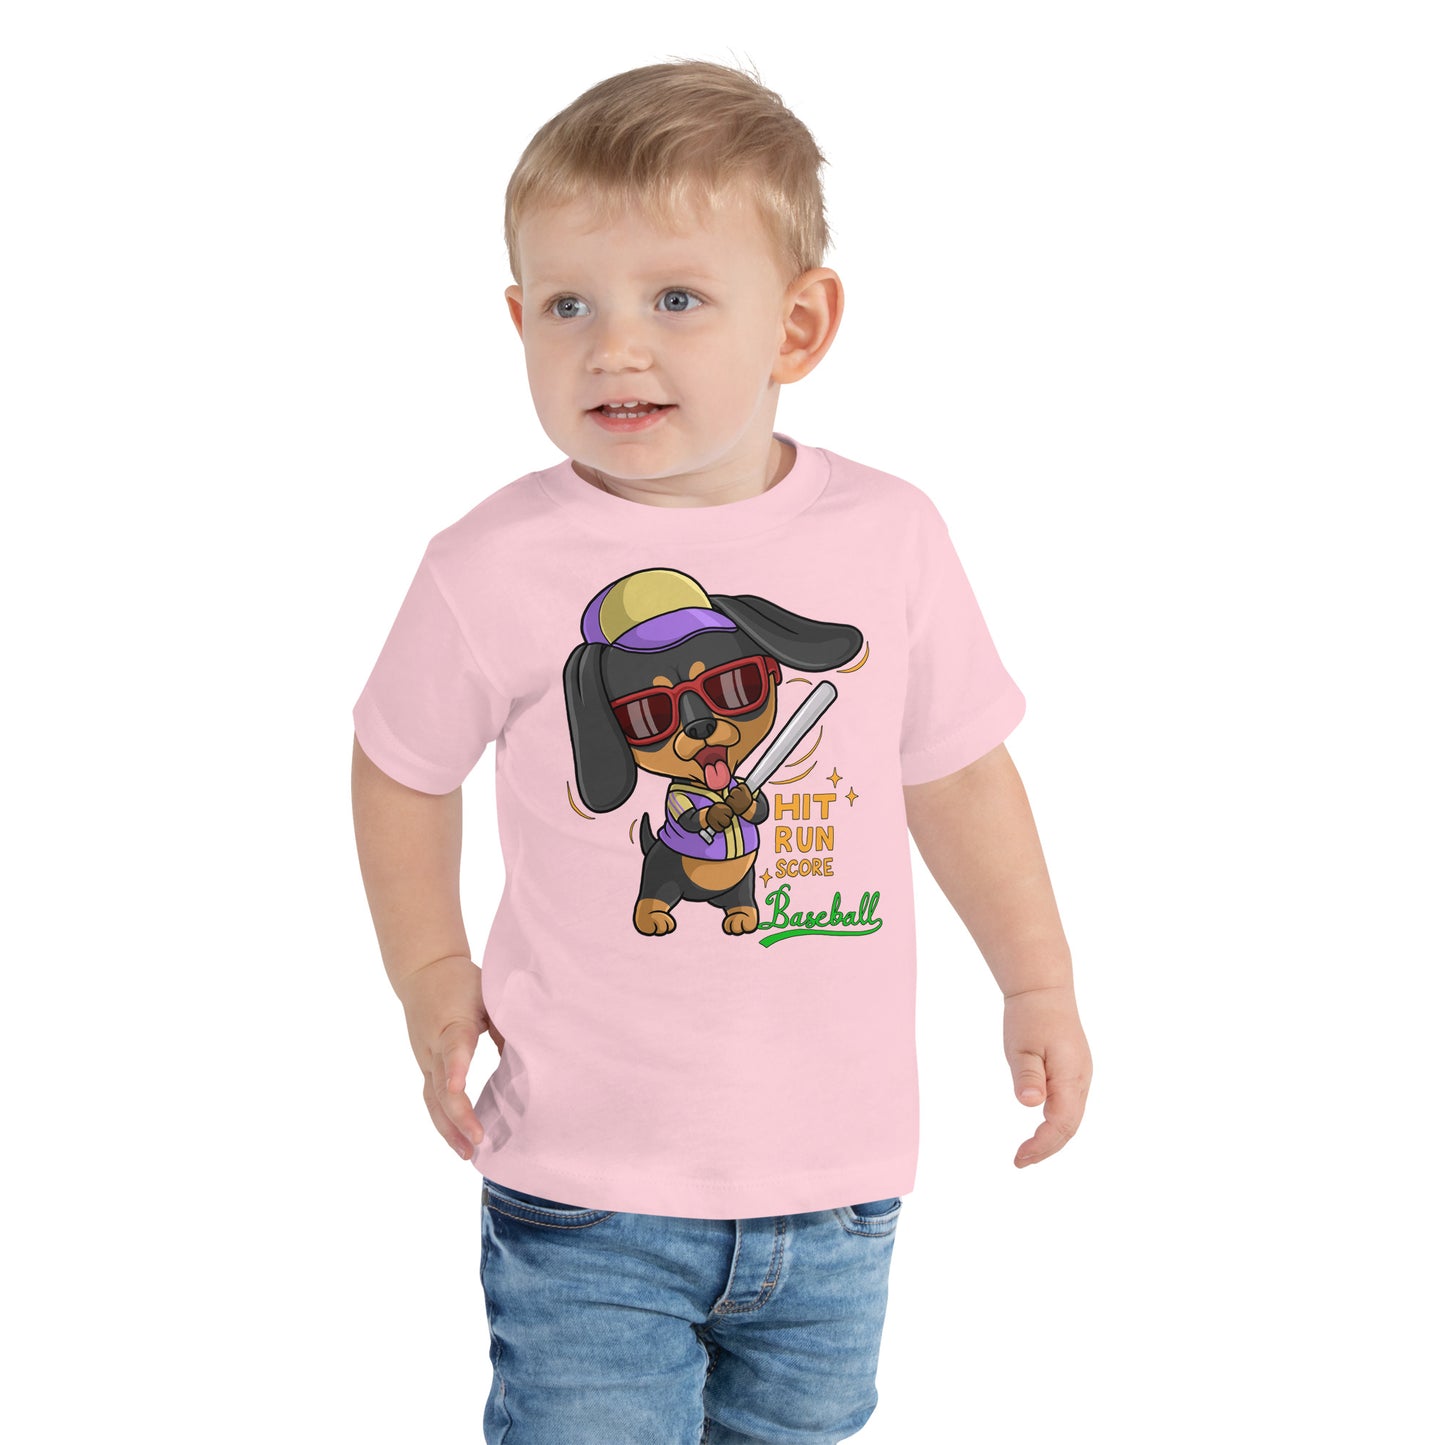 Cool Dachshund Dog Playing Baseball T-shirt, No. 0255